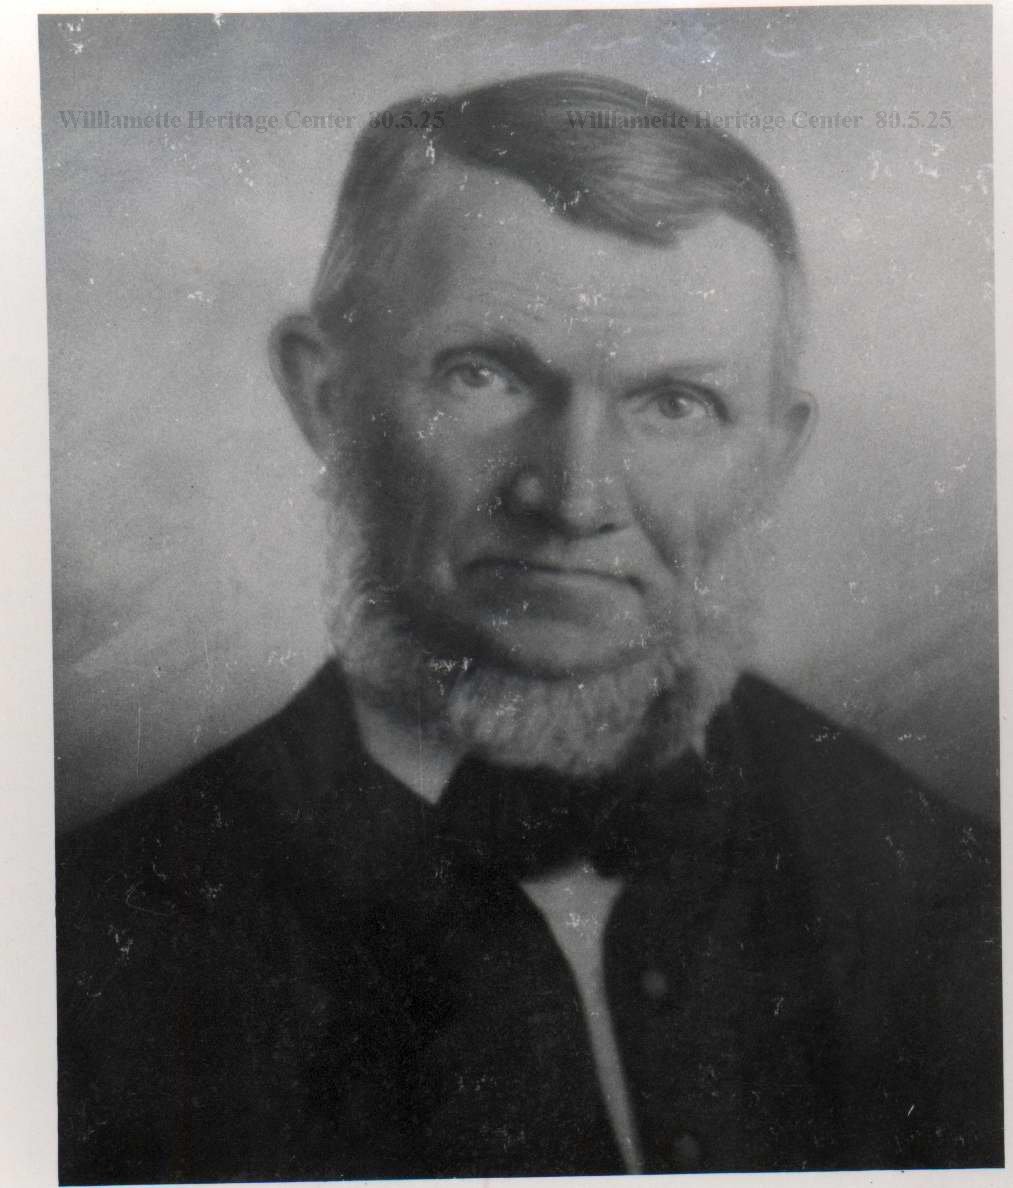 Portrait Thomas Cox, Willamette Heritage Center, WHC 80.5.25.